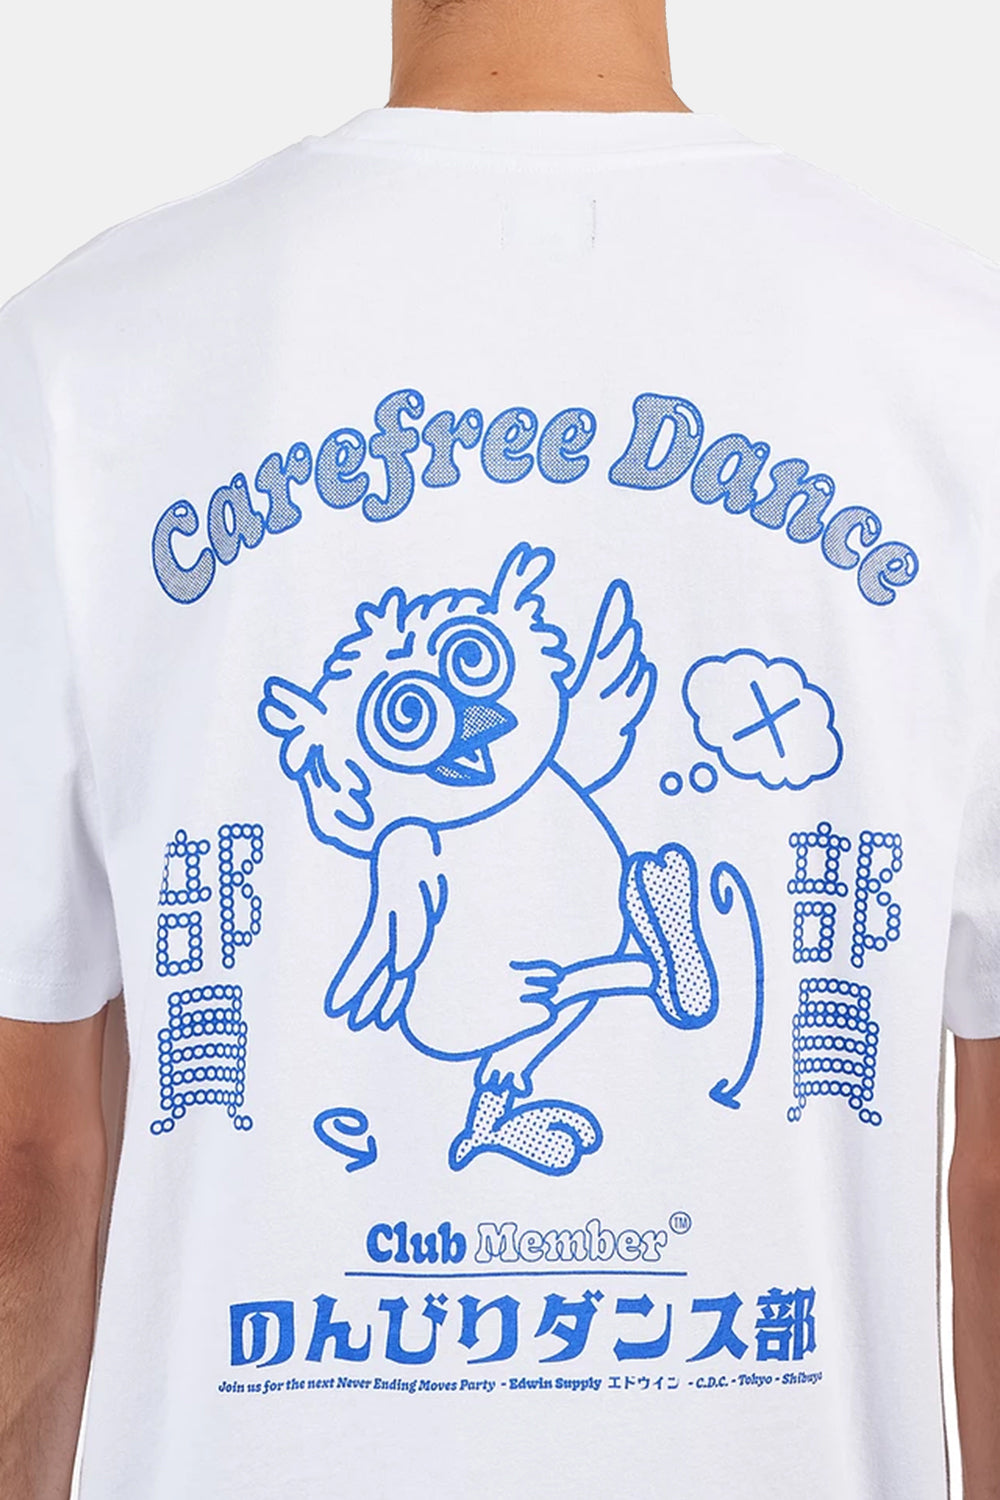 Edwin - T-shirt Carefree Dance Club (blanc lavé)